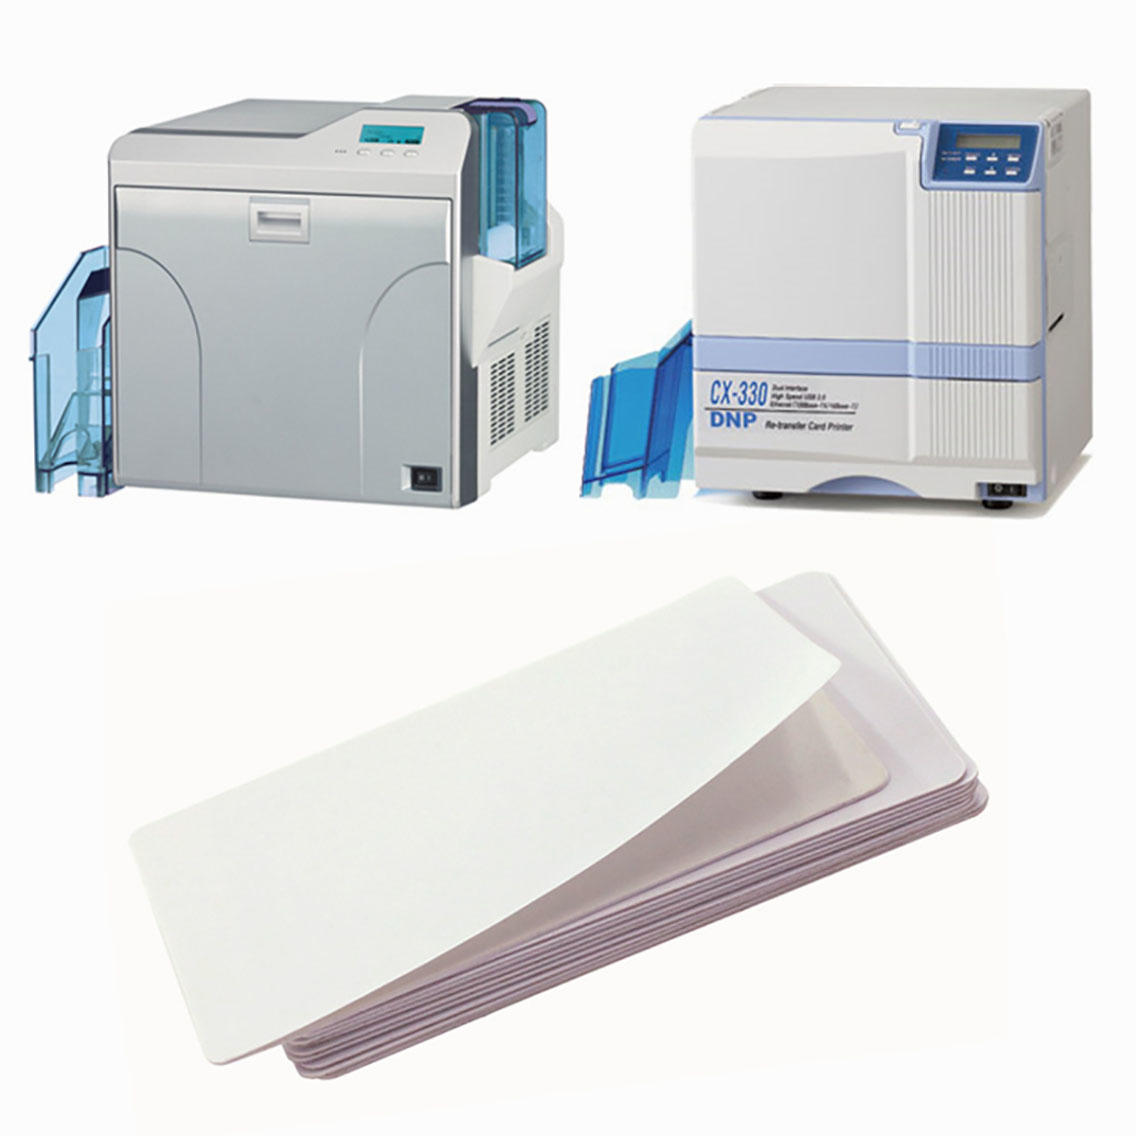 Cleanmo durable Dai Nippon Printer Cleaning Kits supplier for DNP CX-210, CX-320 & CX-330 Printers